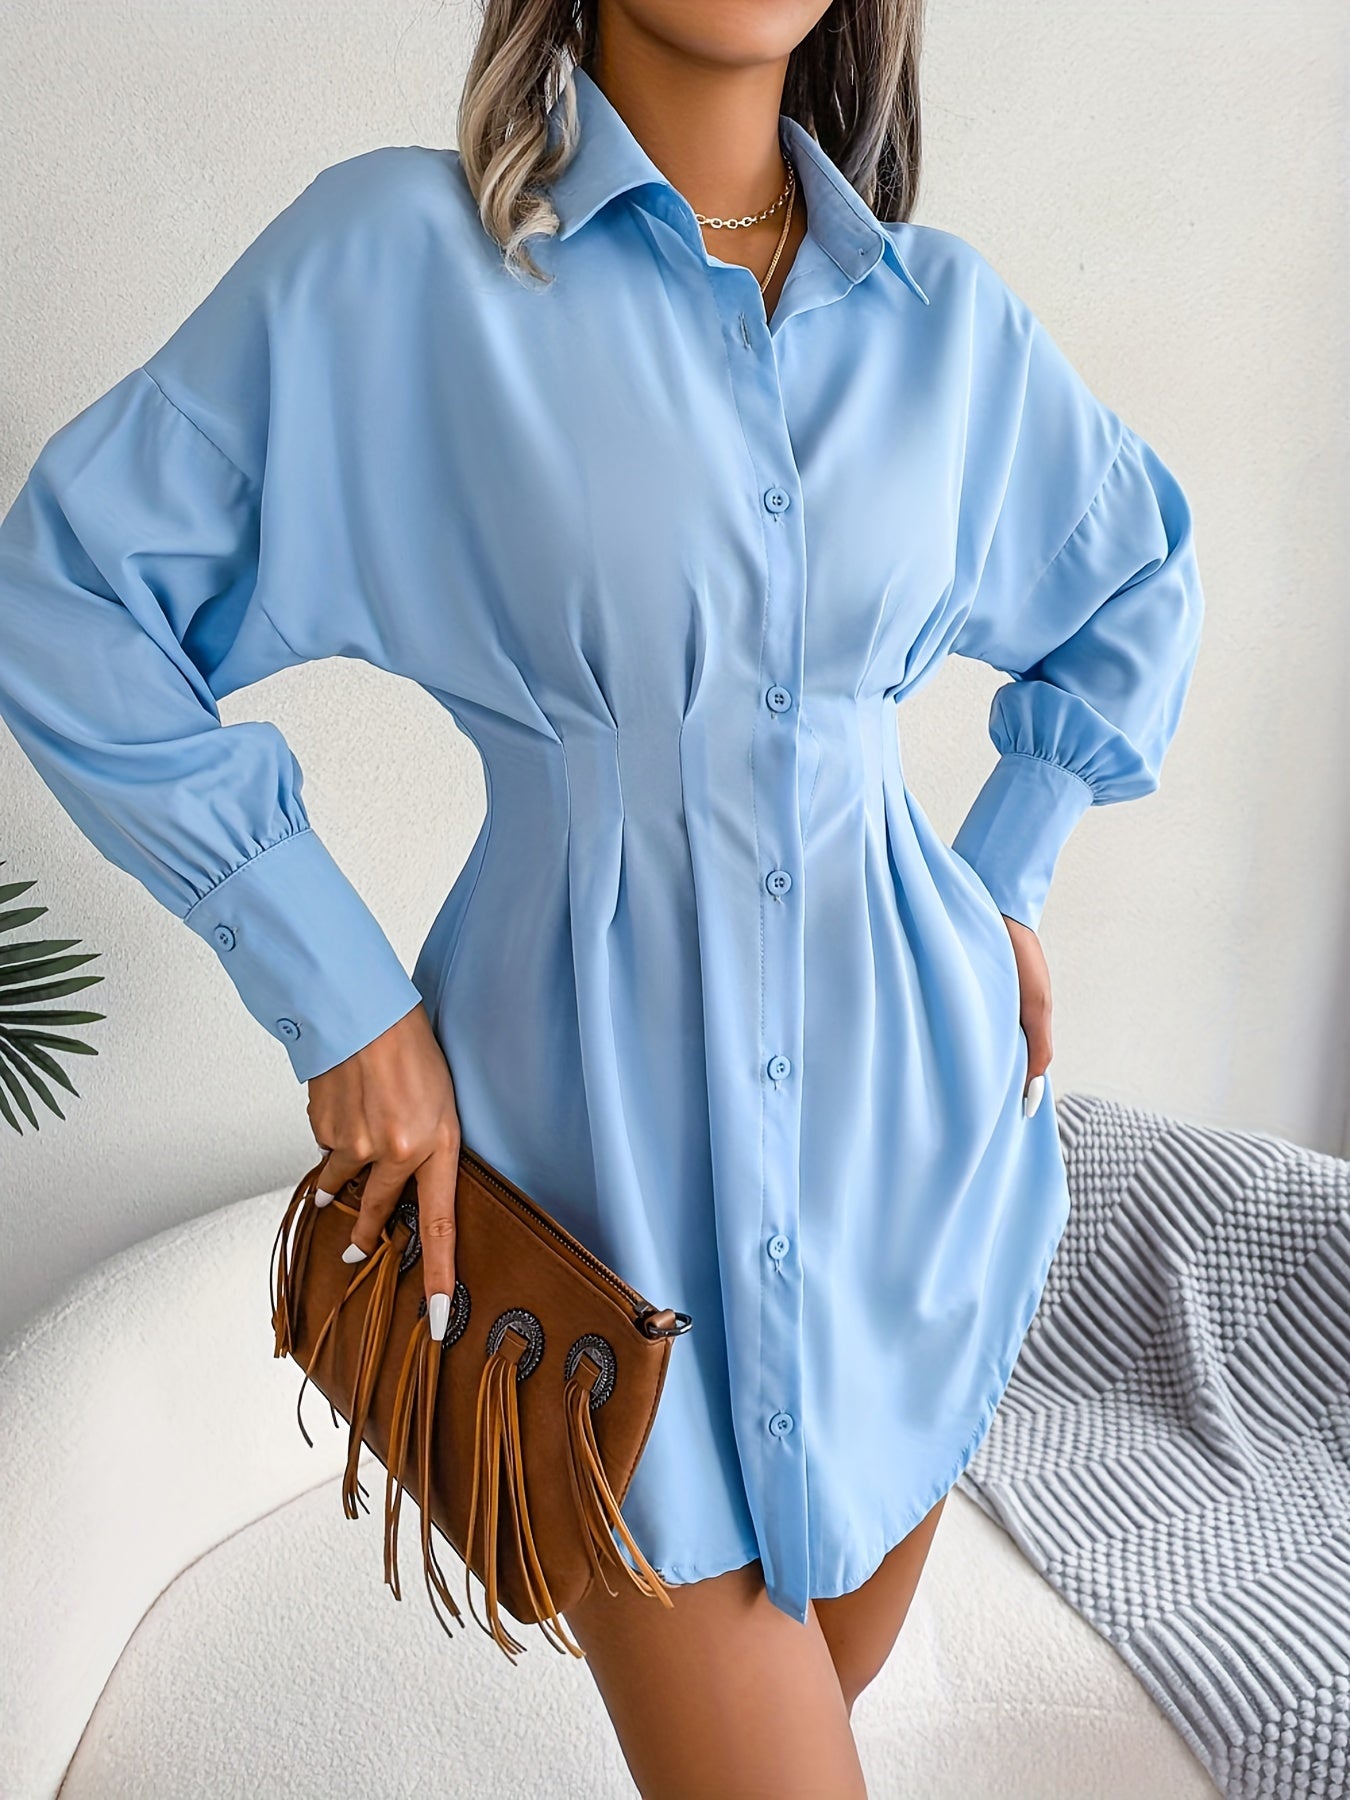 Antmvs Long Sleeve Mini Shirt Dress, Button Up Casual Dress For Fall & Spring, Women's Clothing